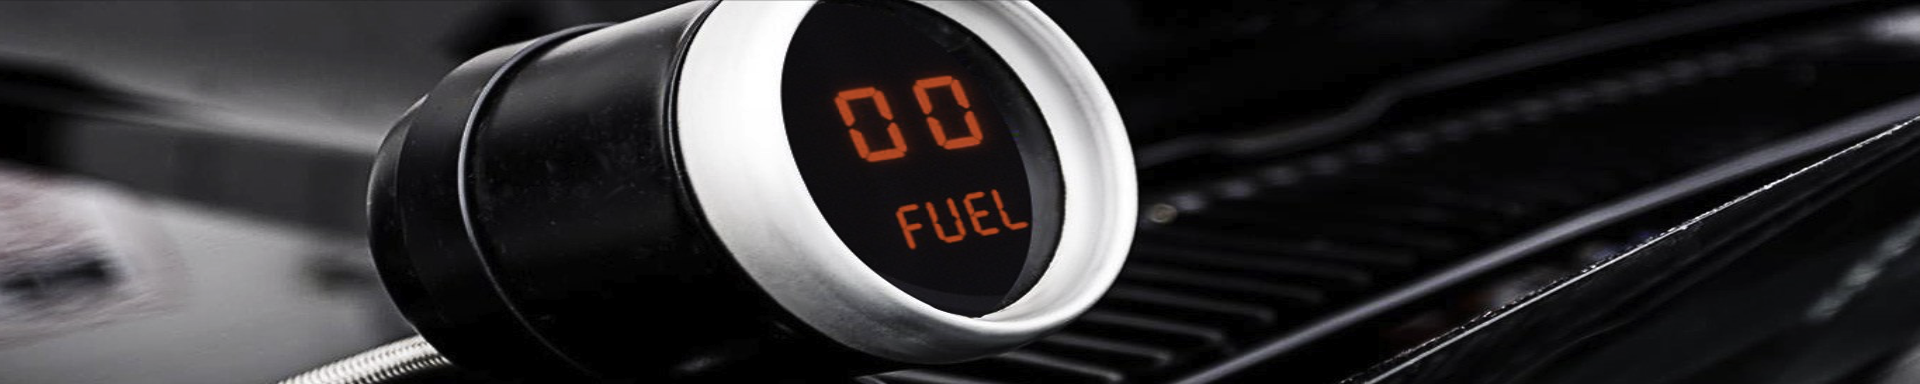 Fuel Level Gauges | GarageAndFab.com | Munro Industries gf-100103050505